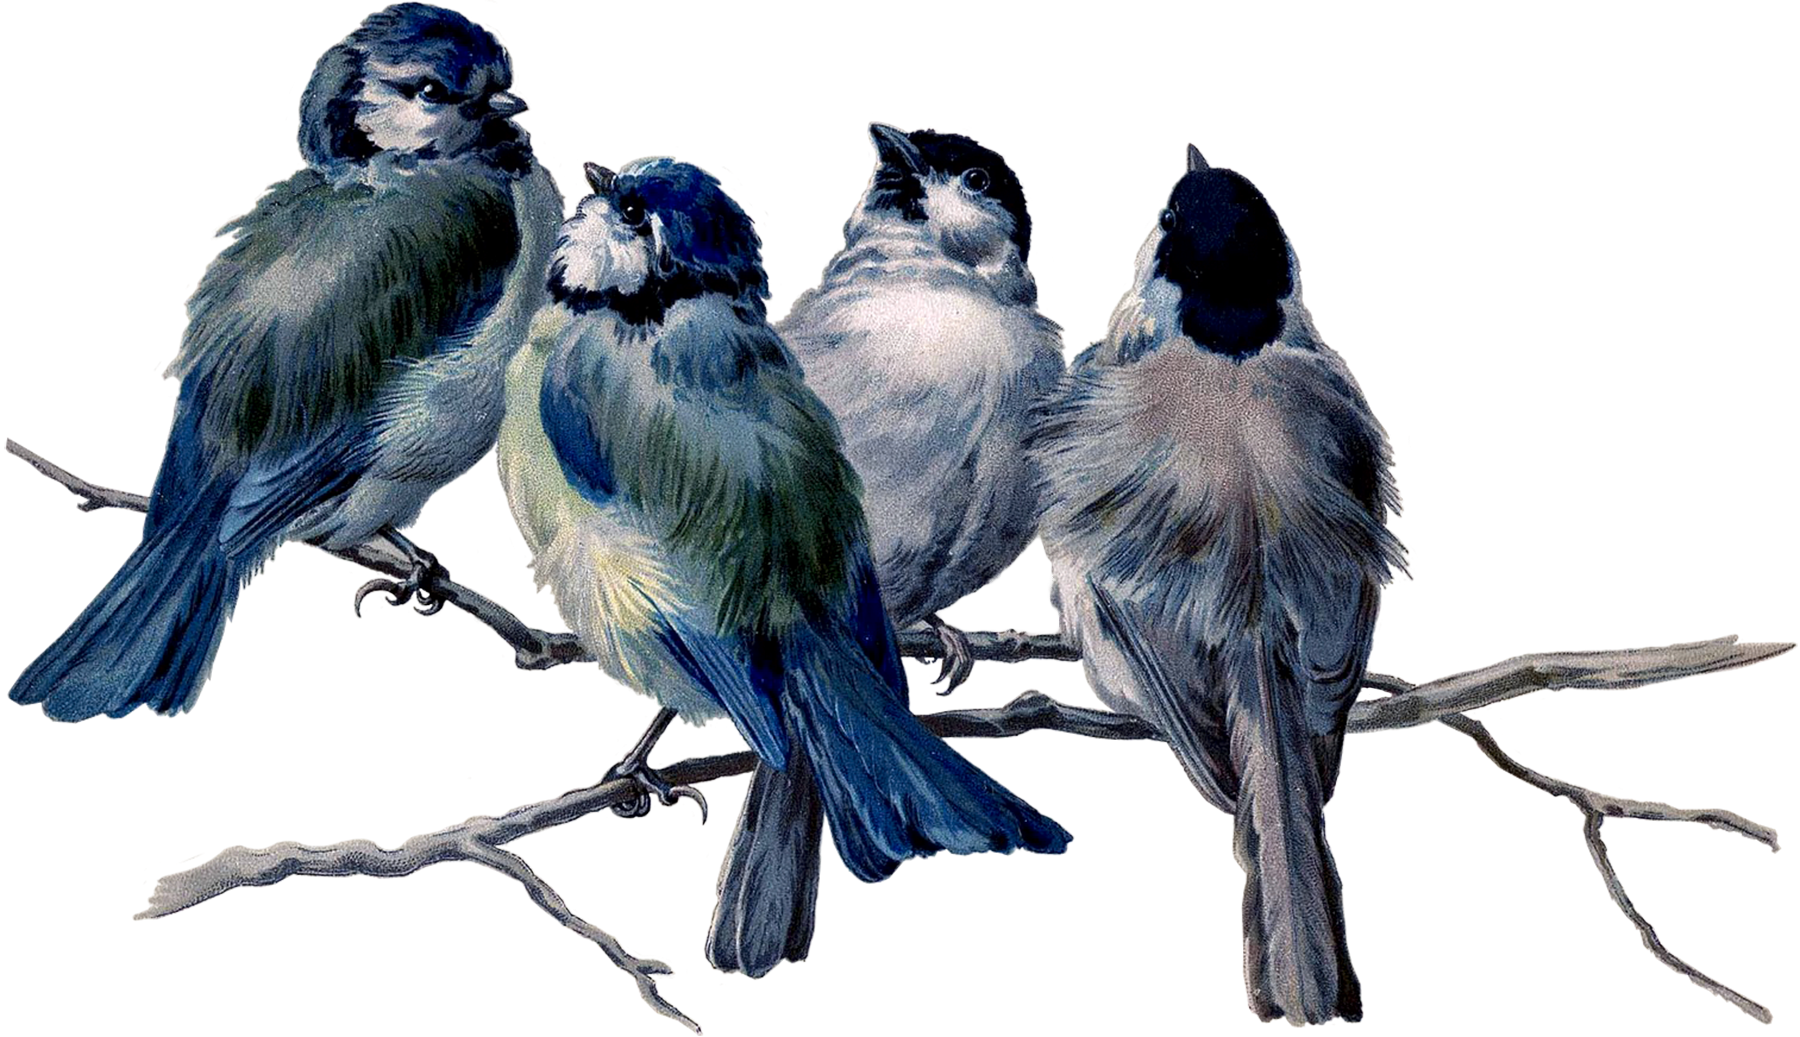 They like birds. Гектор Джакомелли птичий насест. Гектор Джакомелли, 1880 - птичий окунь. Птица на ветке. Птичка на веточке.